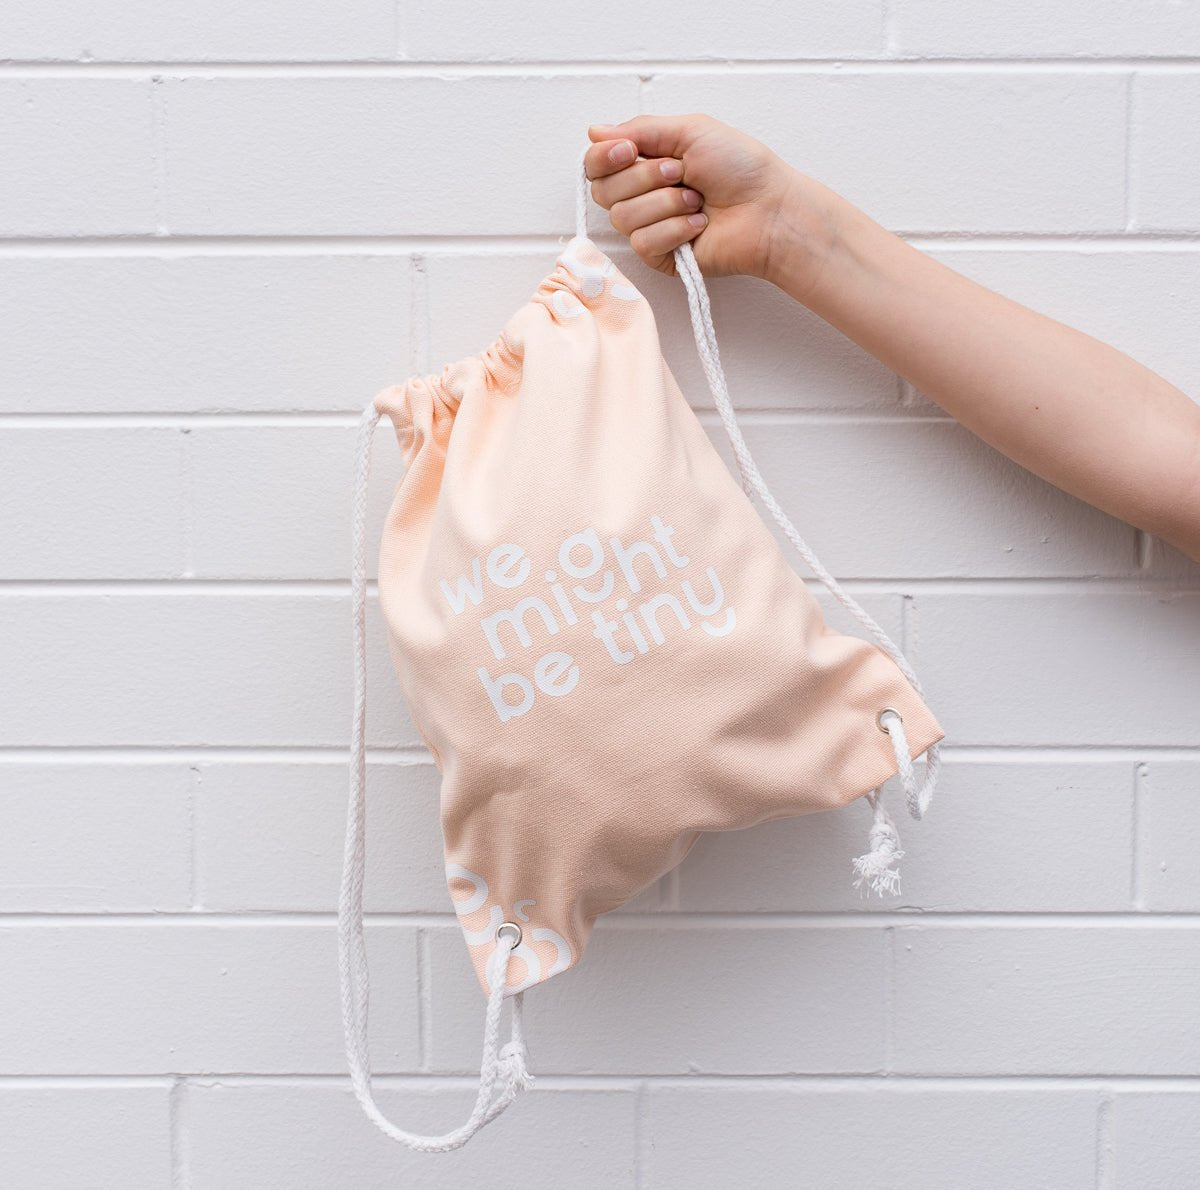 We Might Be Tiny Drawstring Bag - Tiny Peach 🍑 (limited edition)